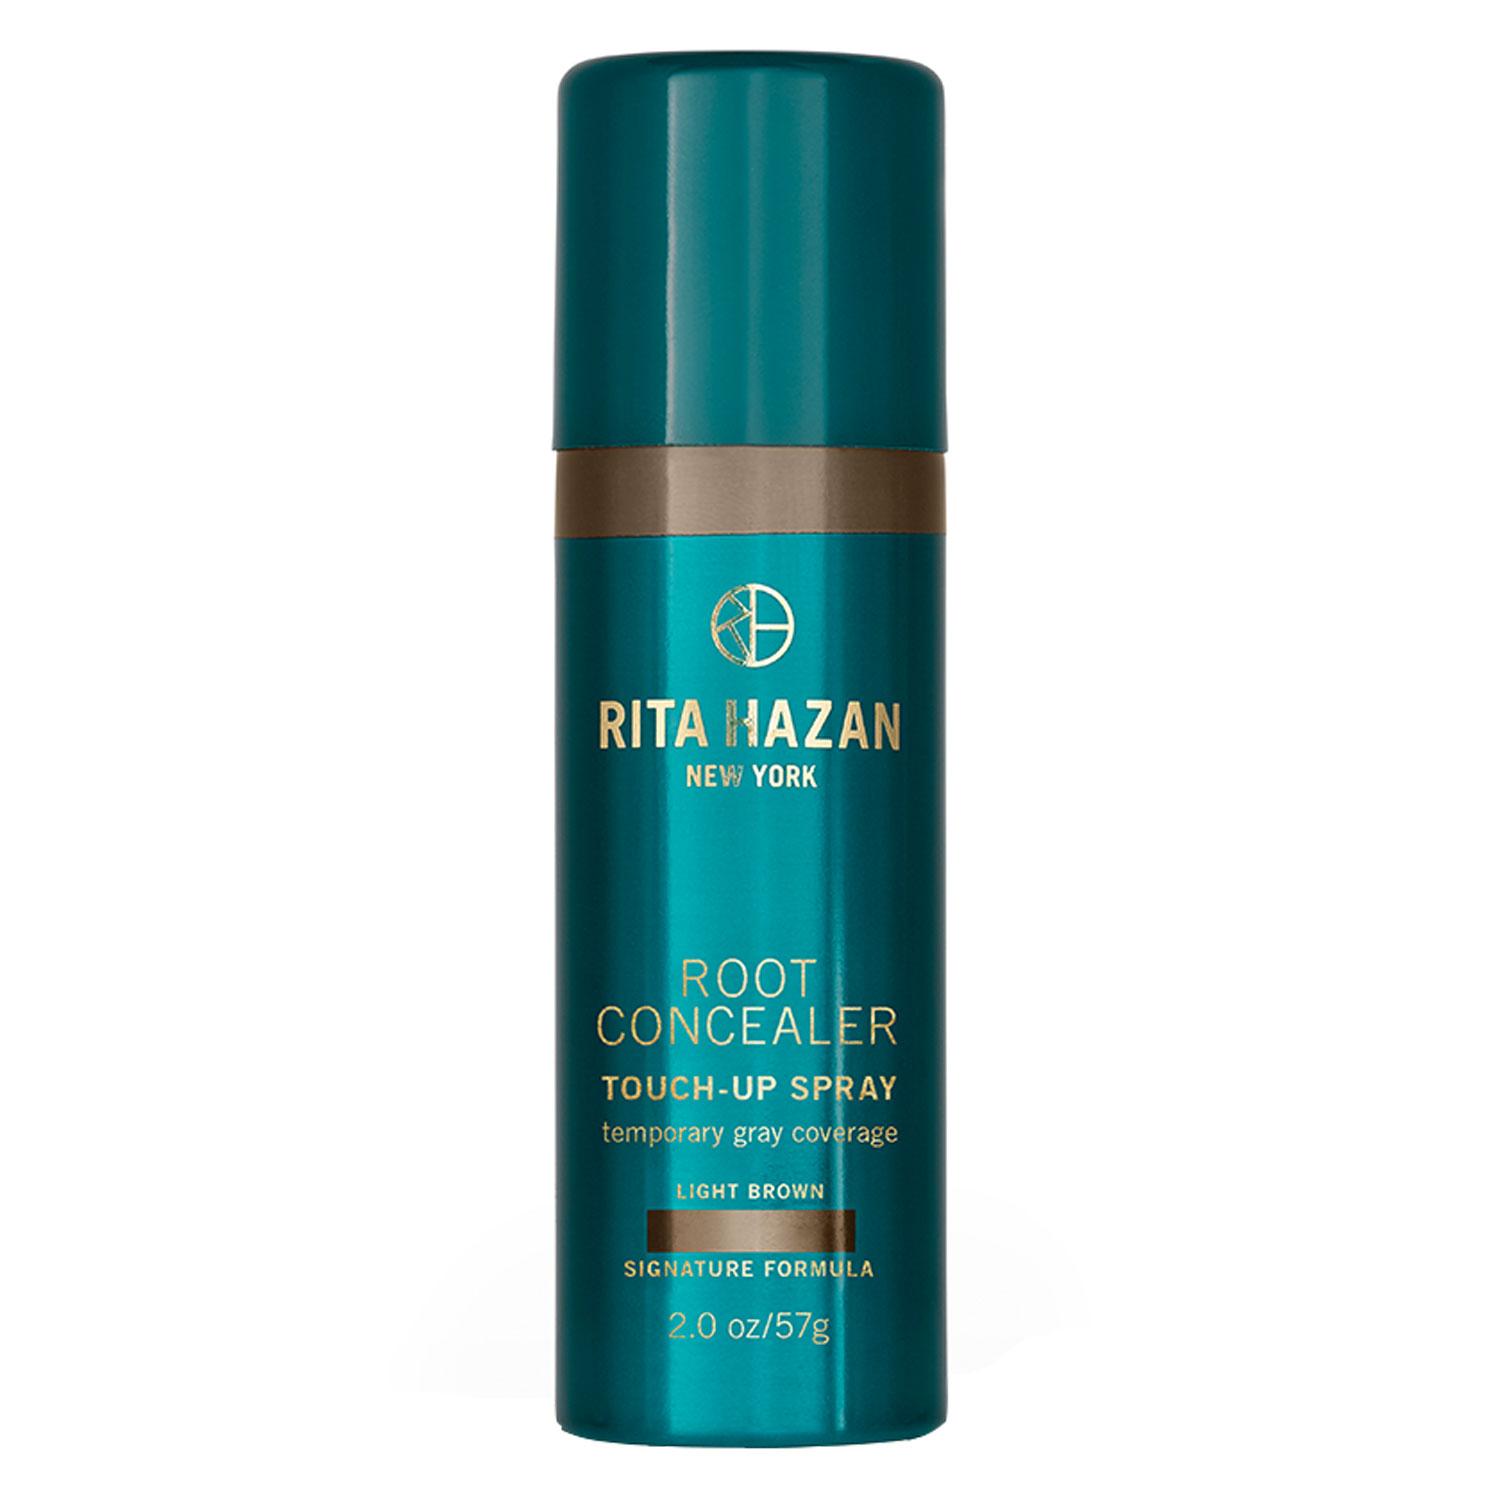 Rita Hazan New York - Root Concealer Touch-Up Spray Light Brown